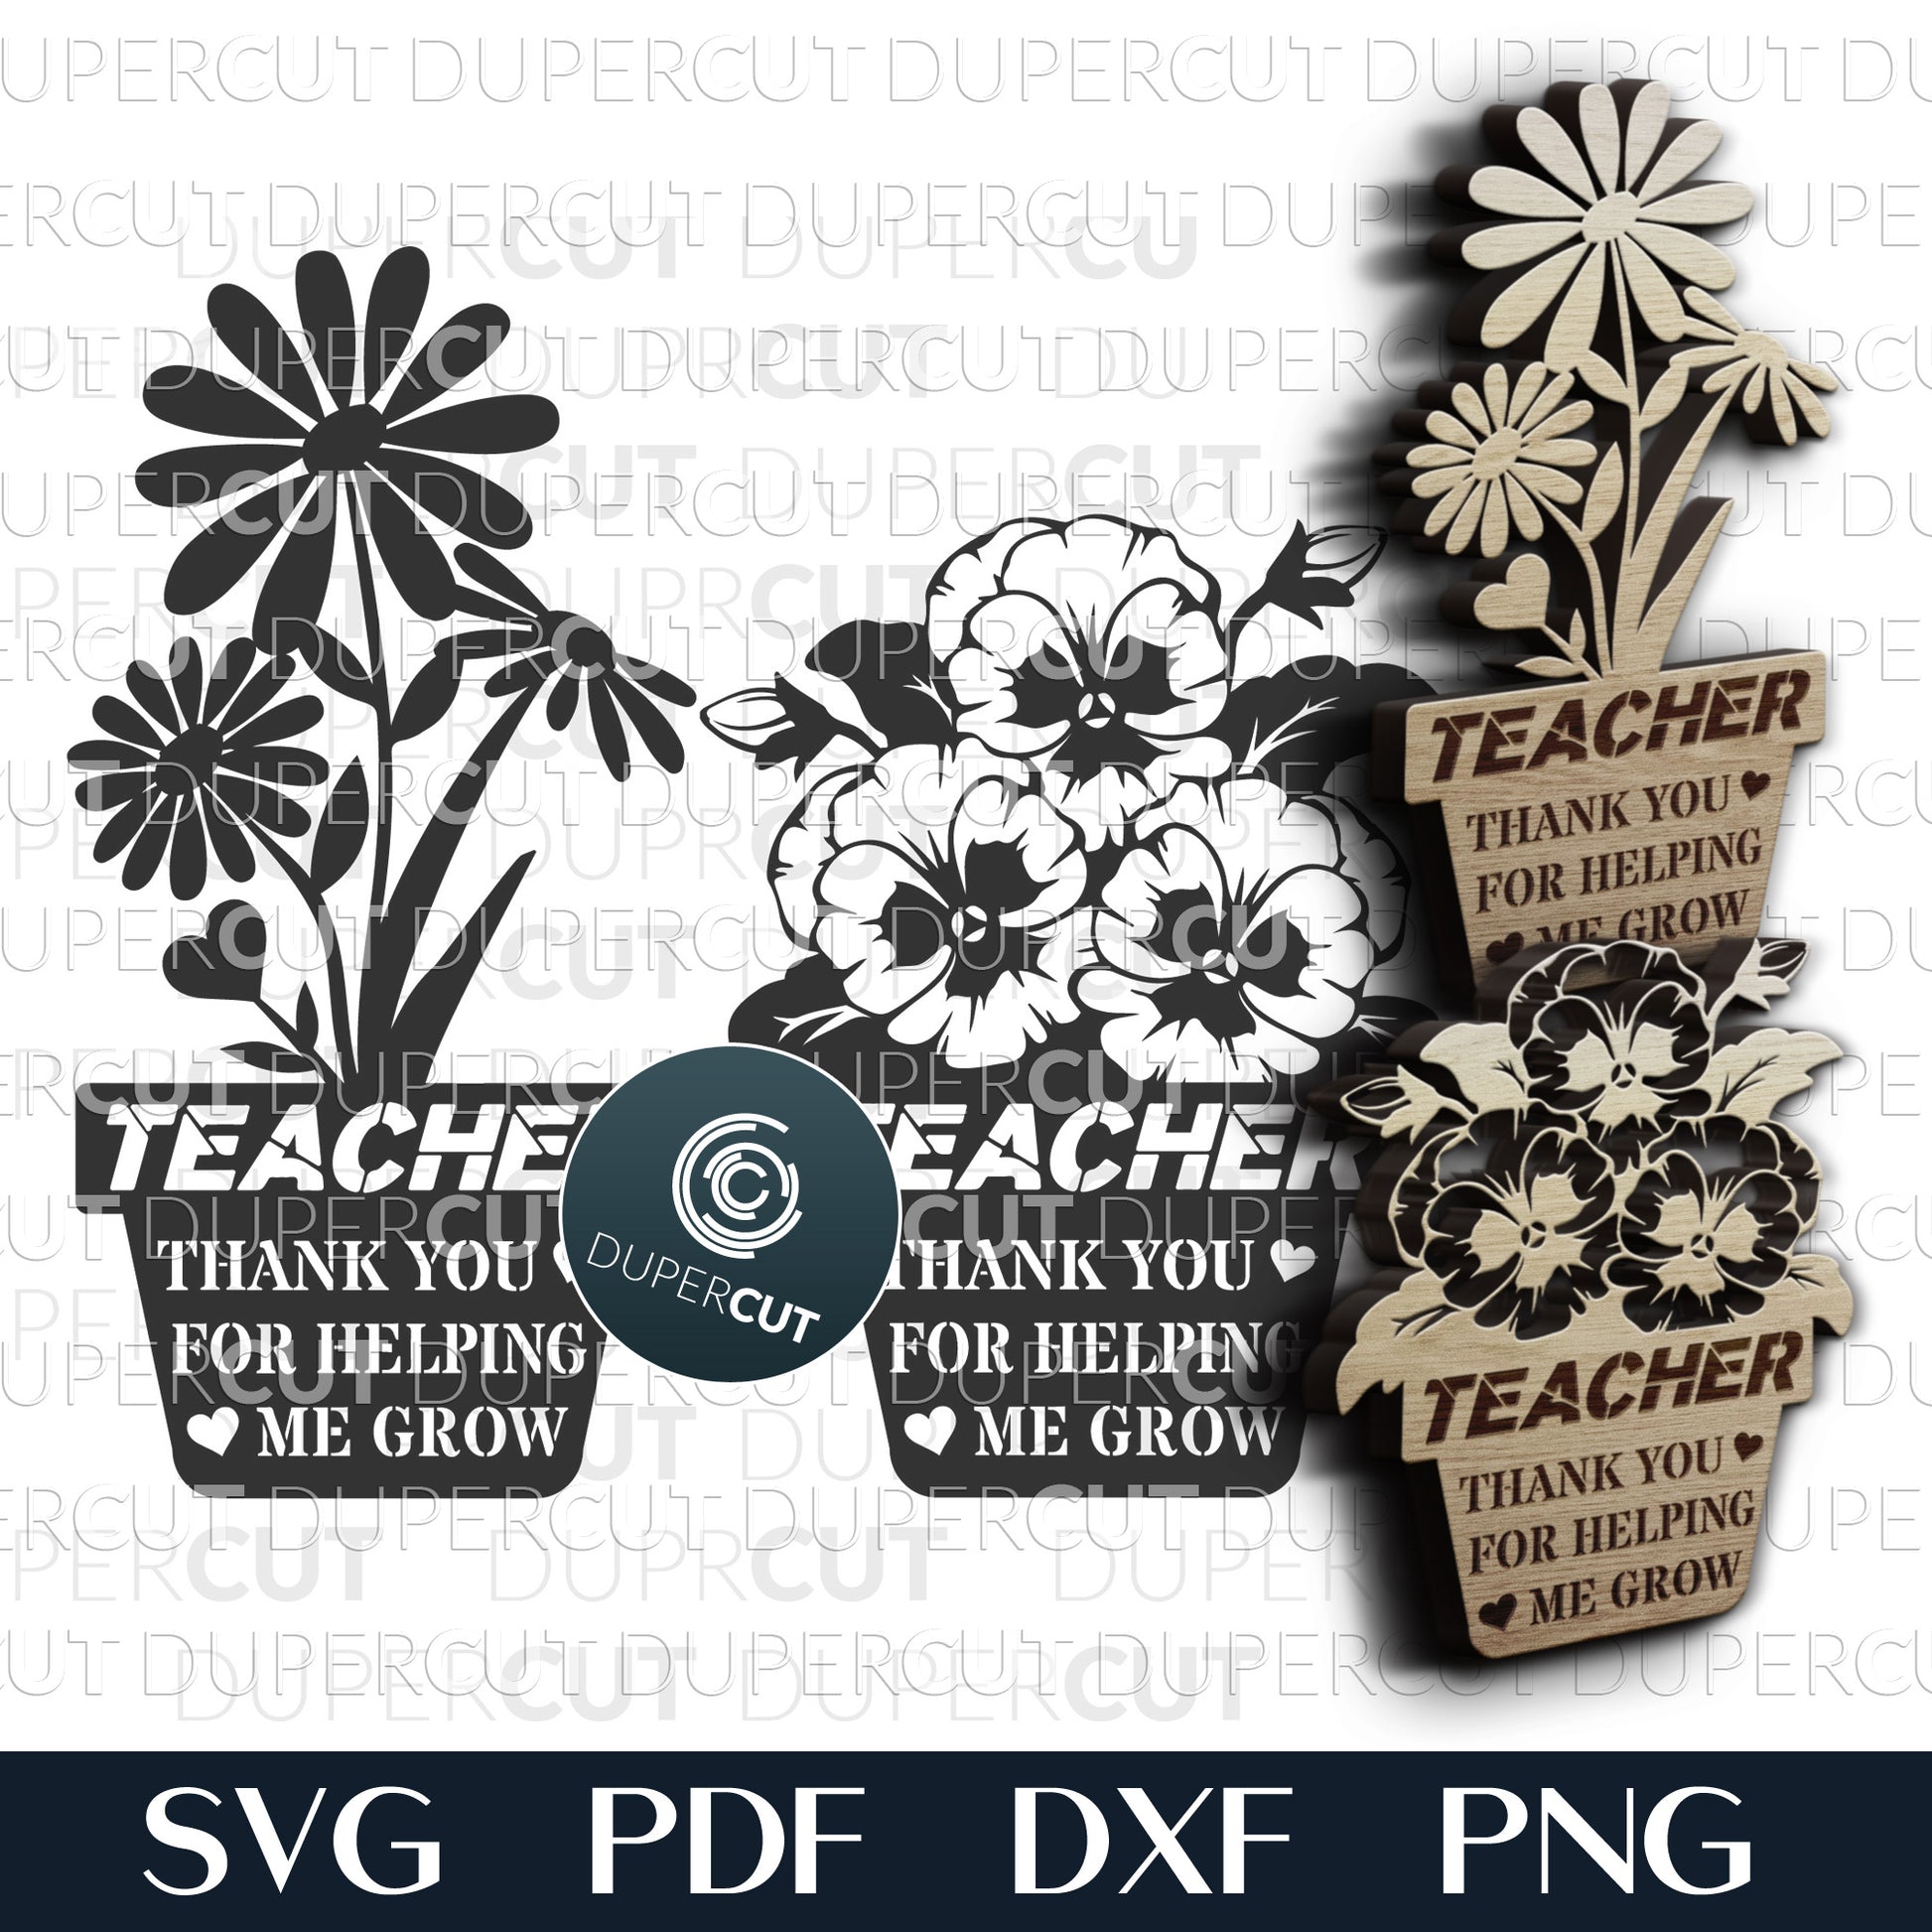 Thank you teacher for helping me grow - DIY teacher's gift flower pot, SVG PDF DXF files for Glowforge, Cricut, Silhouette Cameo, CNC plasma laser machines by DuperCut